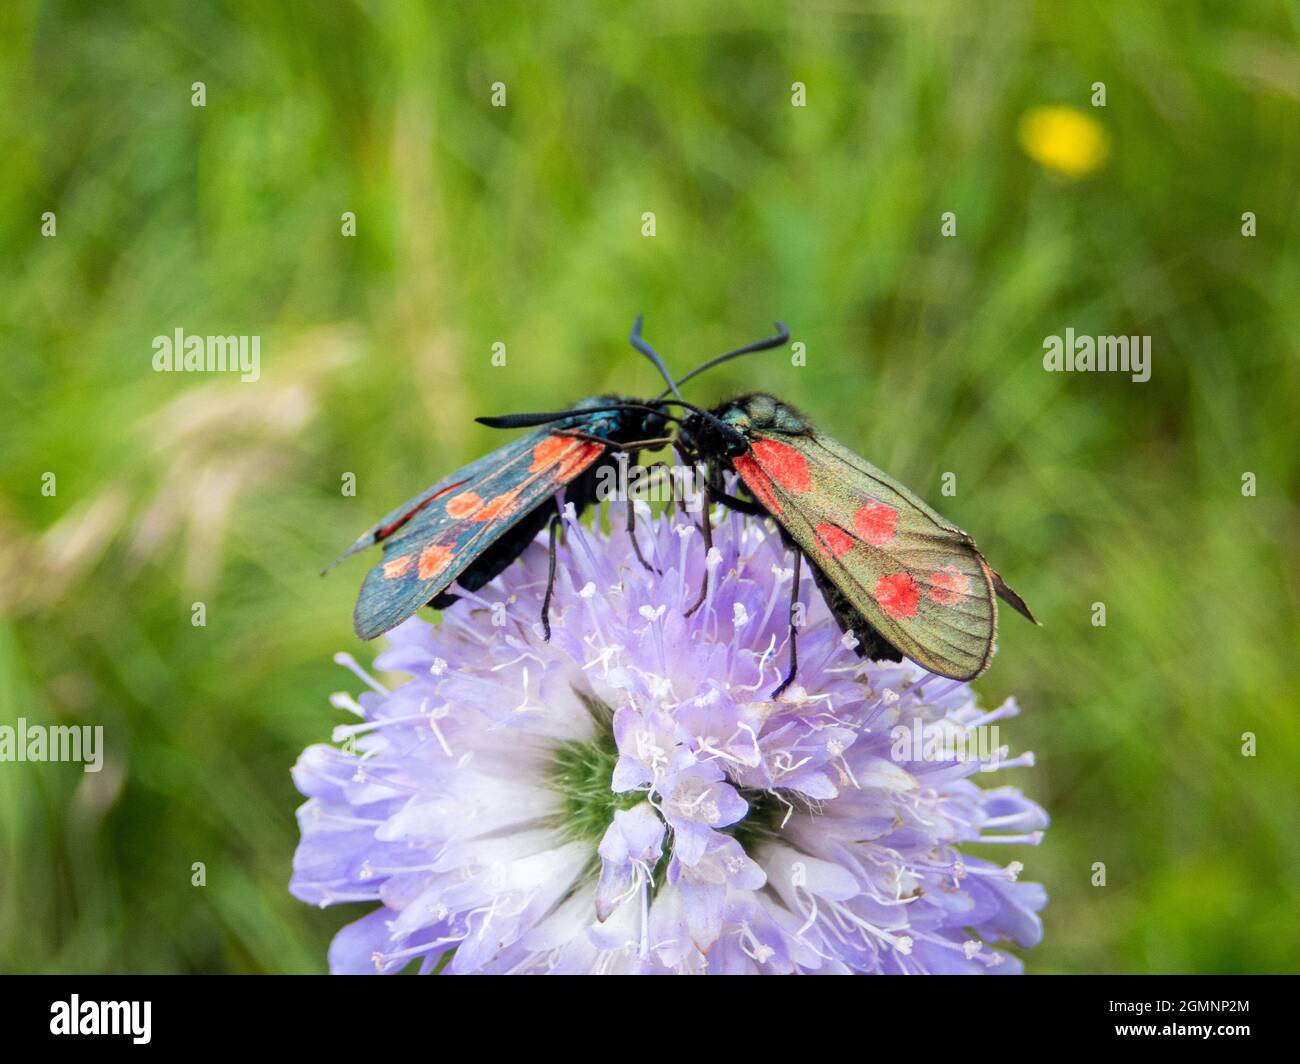 Pair of Six-Spot Burnet moths, Zygaena filipendulae, on a flower, Burkham Woods, Hampshire, UK Stock Photo